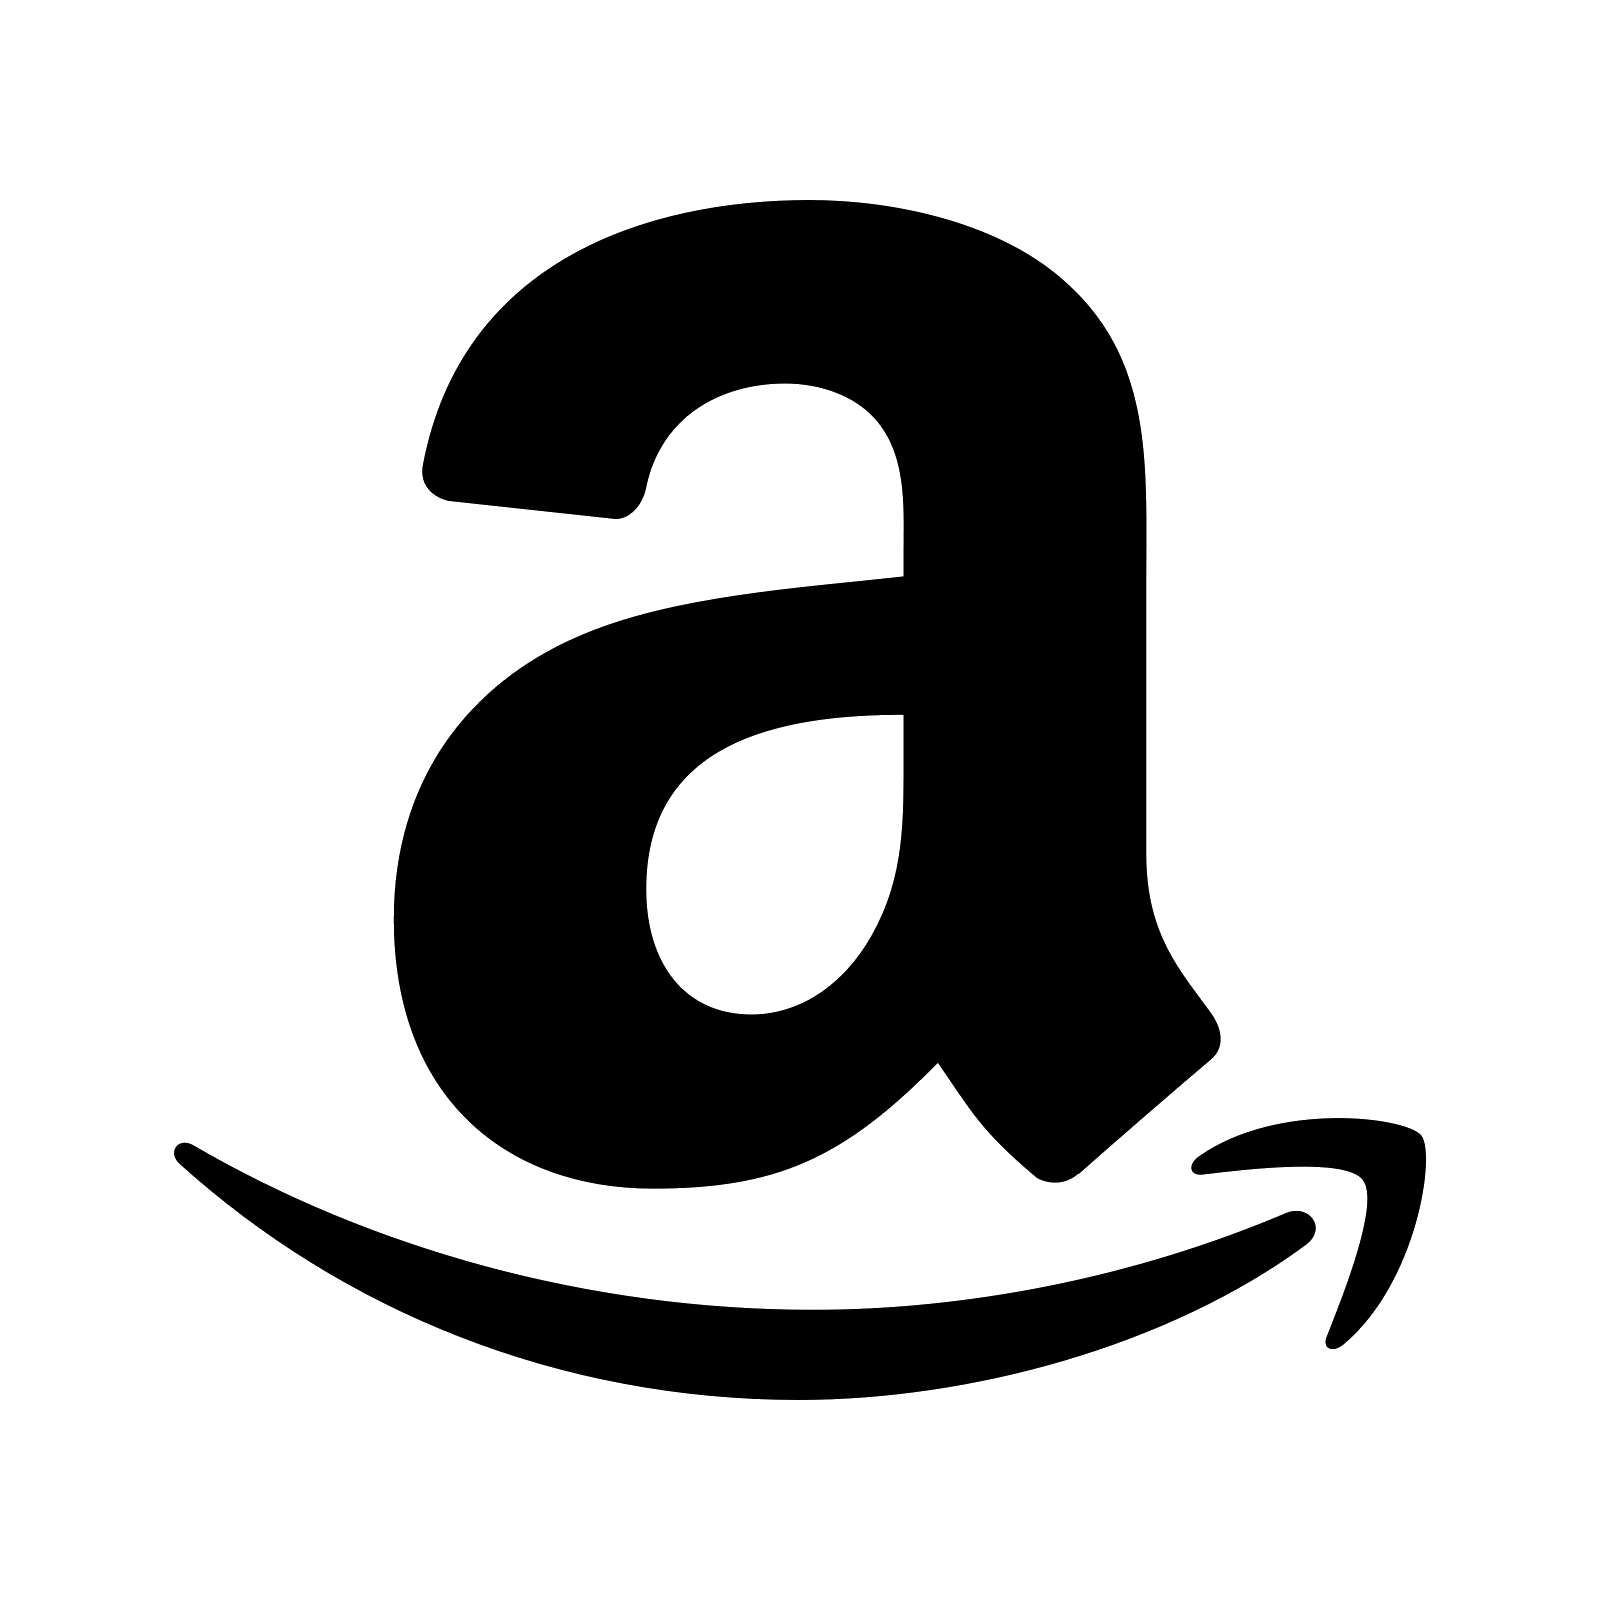 Cool Amazon Logo - Free Amazon Icon Vector 271690 | Download Amazon Icon Vector - 271690